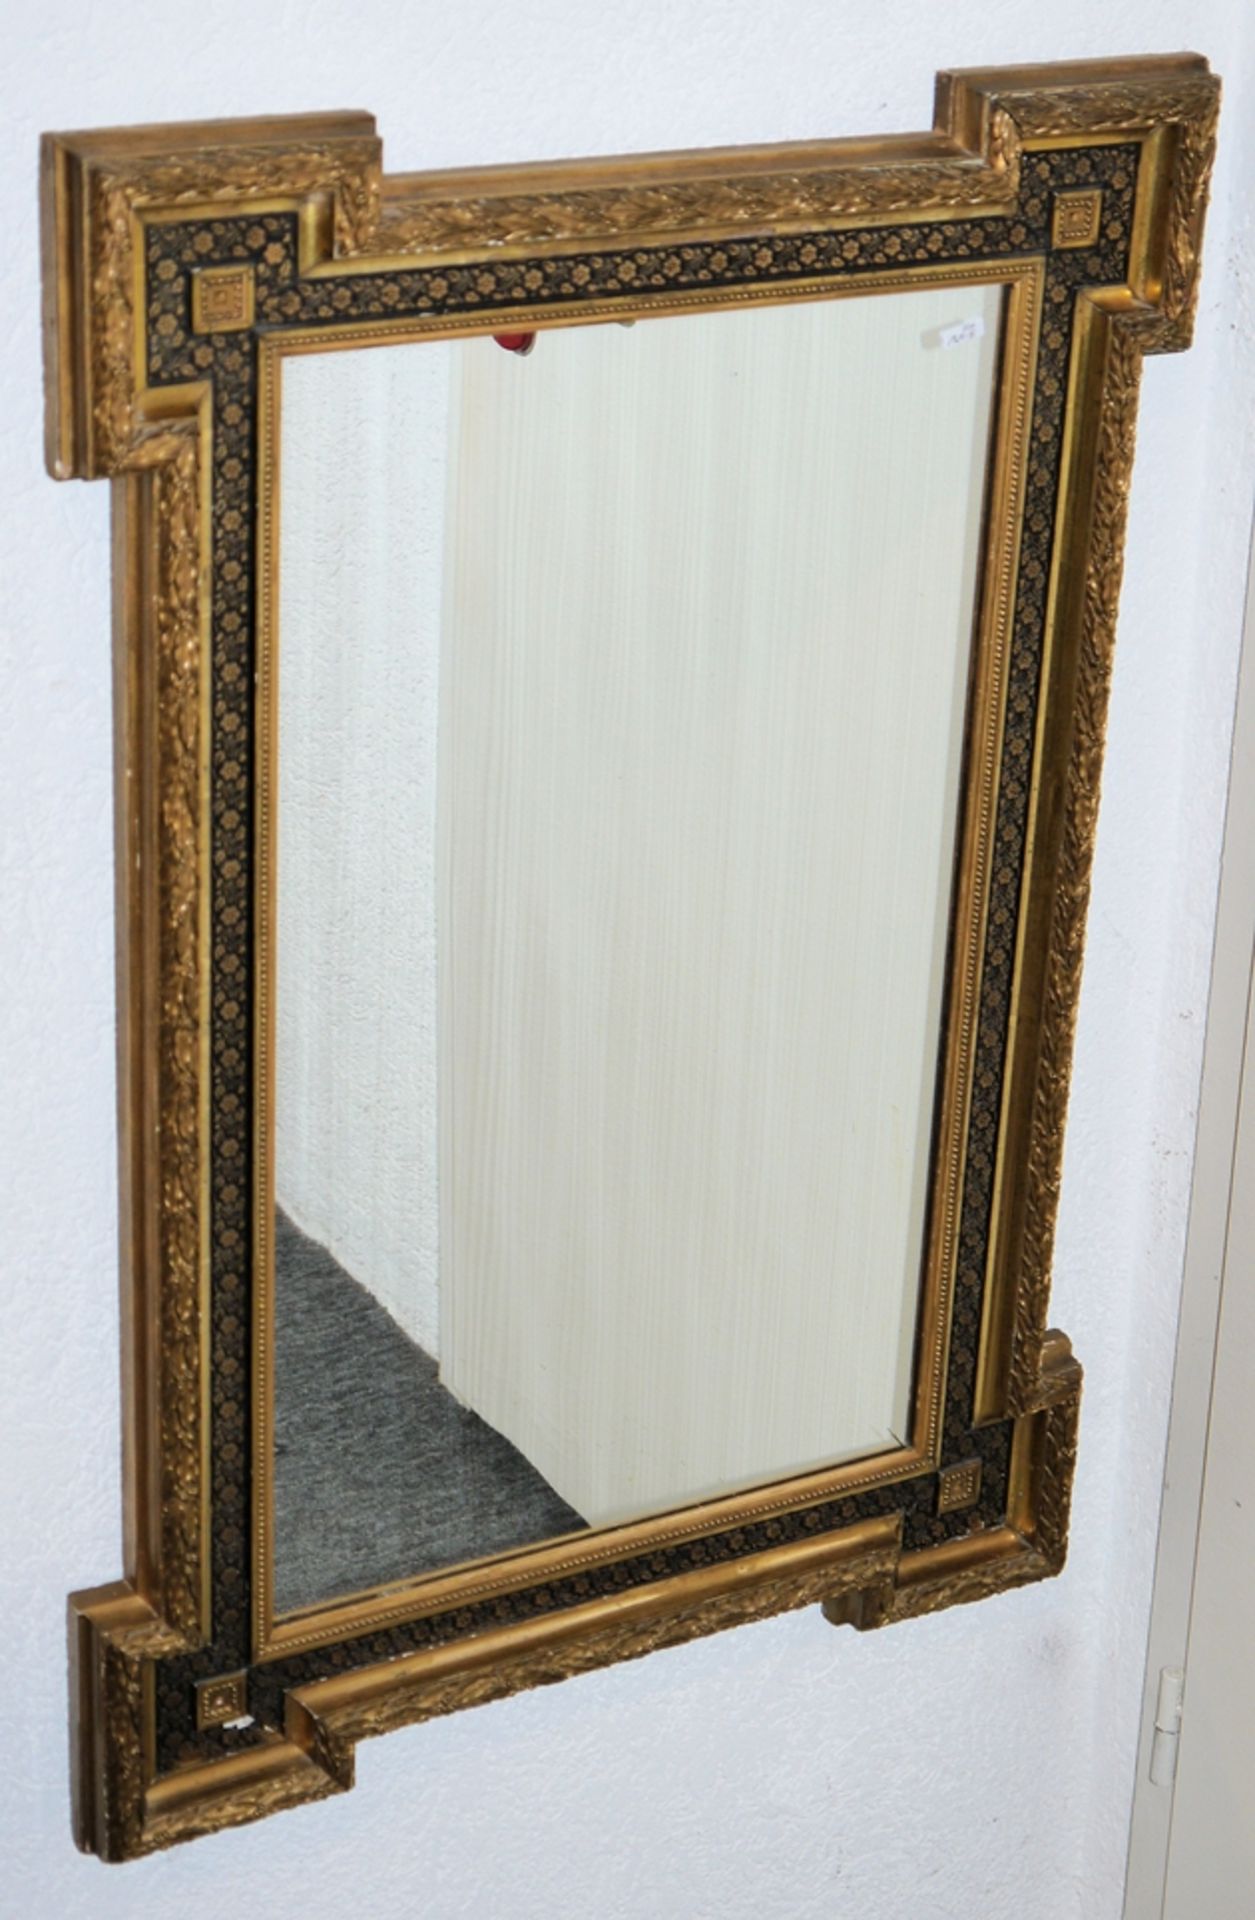 Decorative wall mirror circa 1900